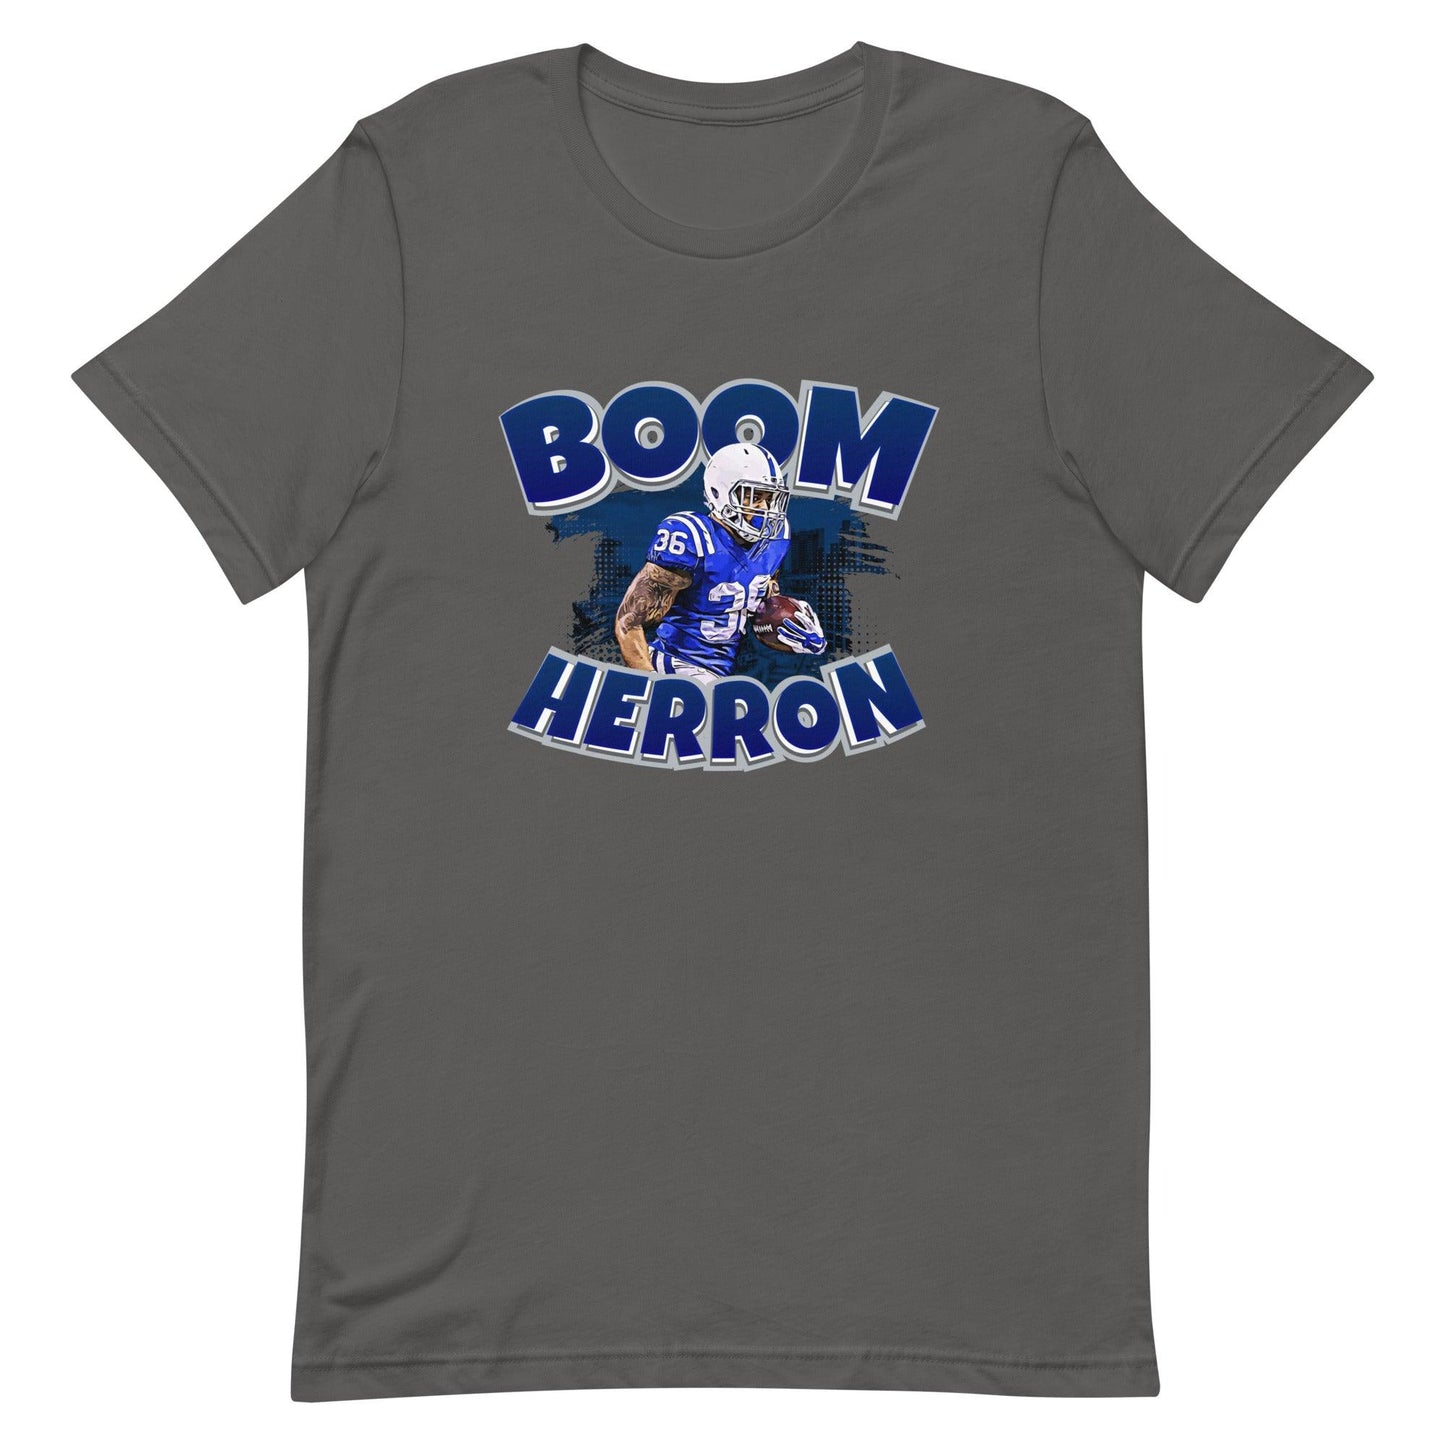 Boom Herron "Gameday" t-shirt - Fan Arch